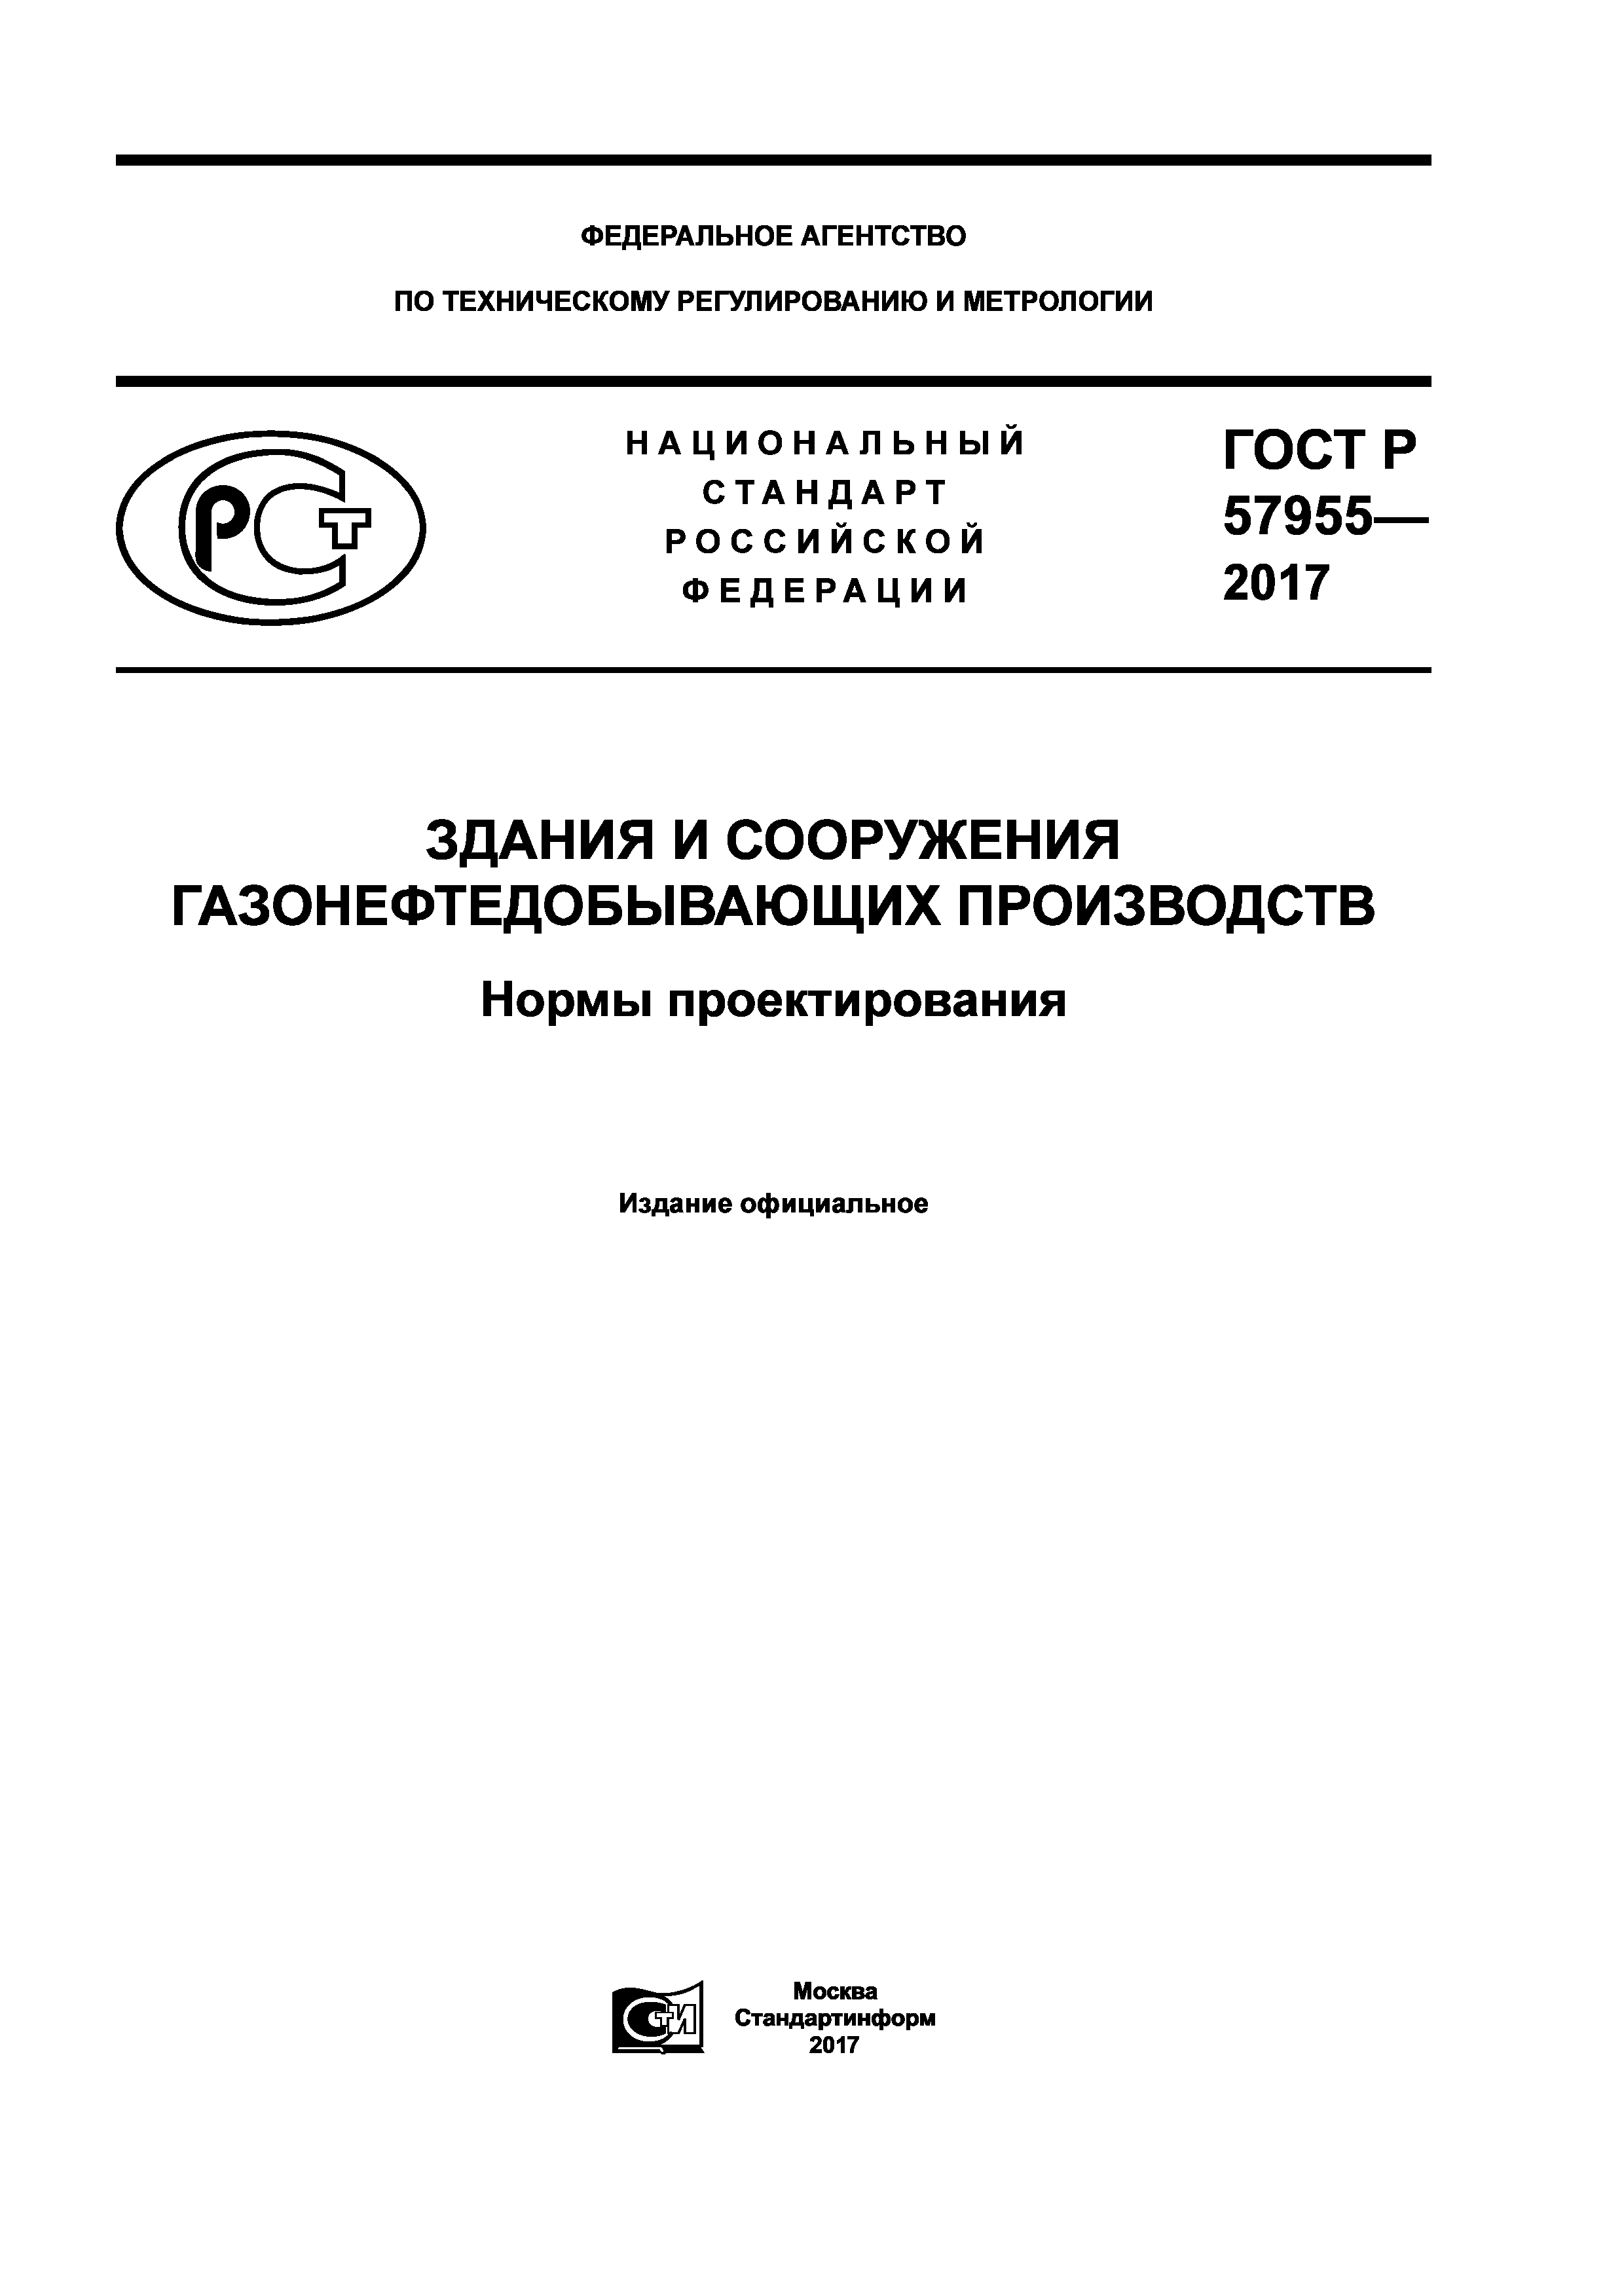 ГОСТ Р 57955-2017